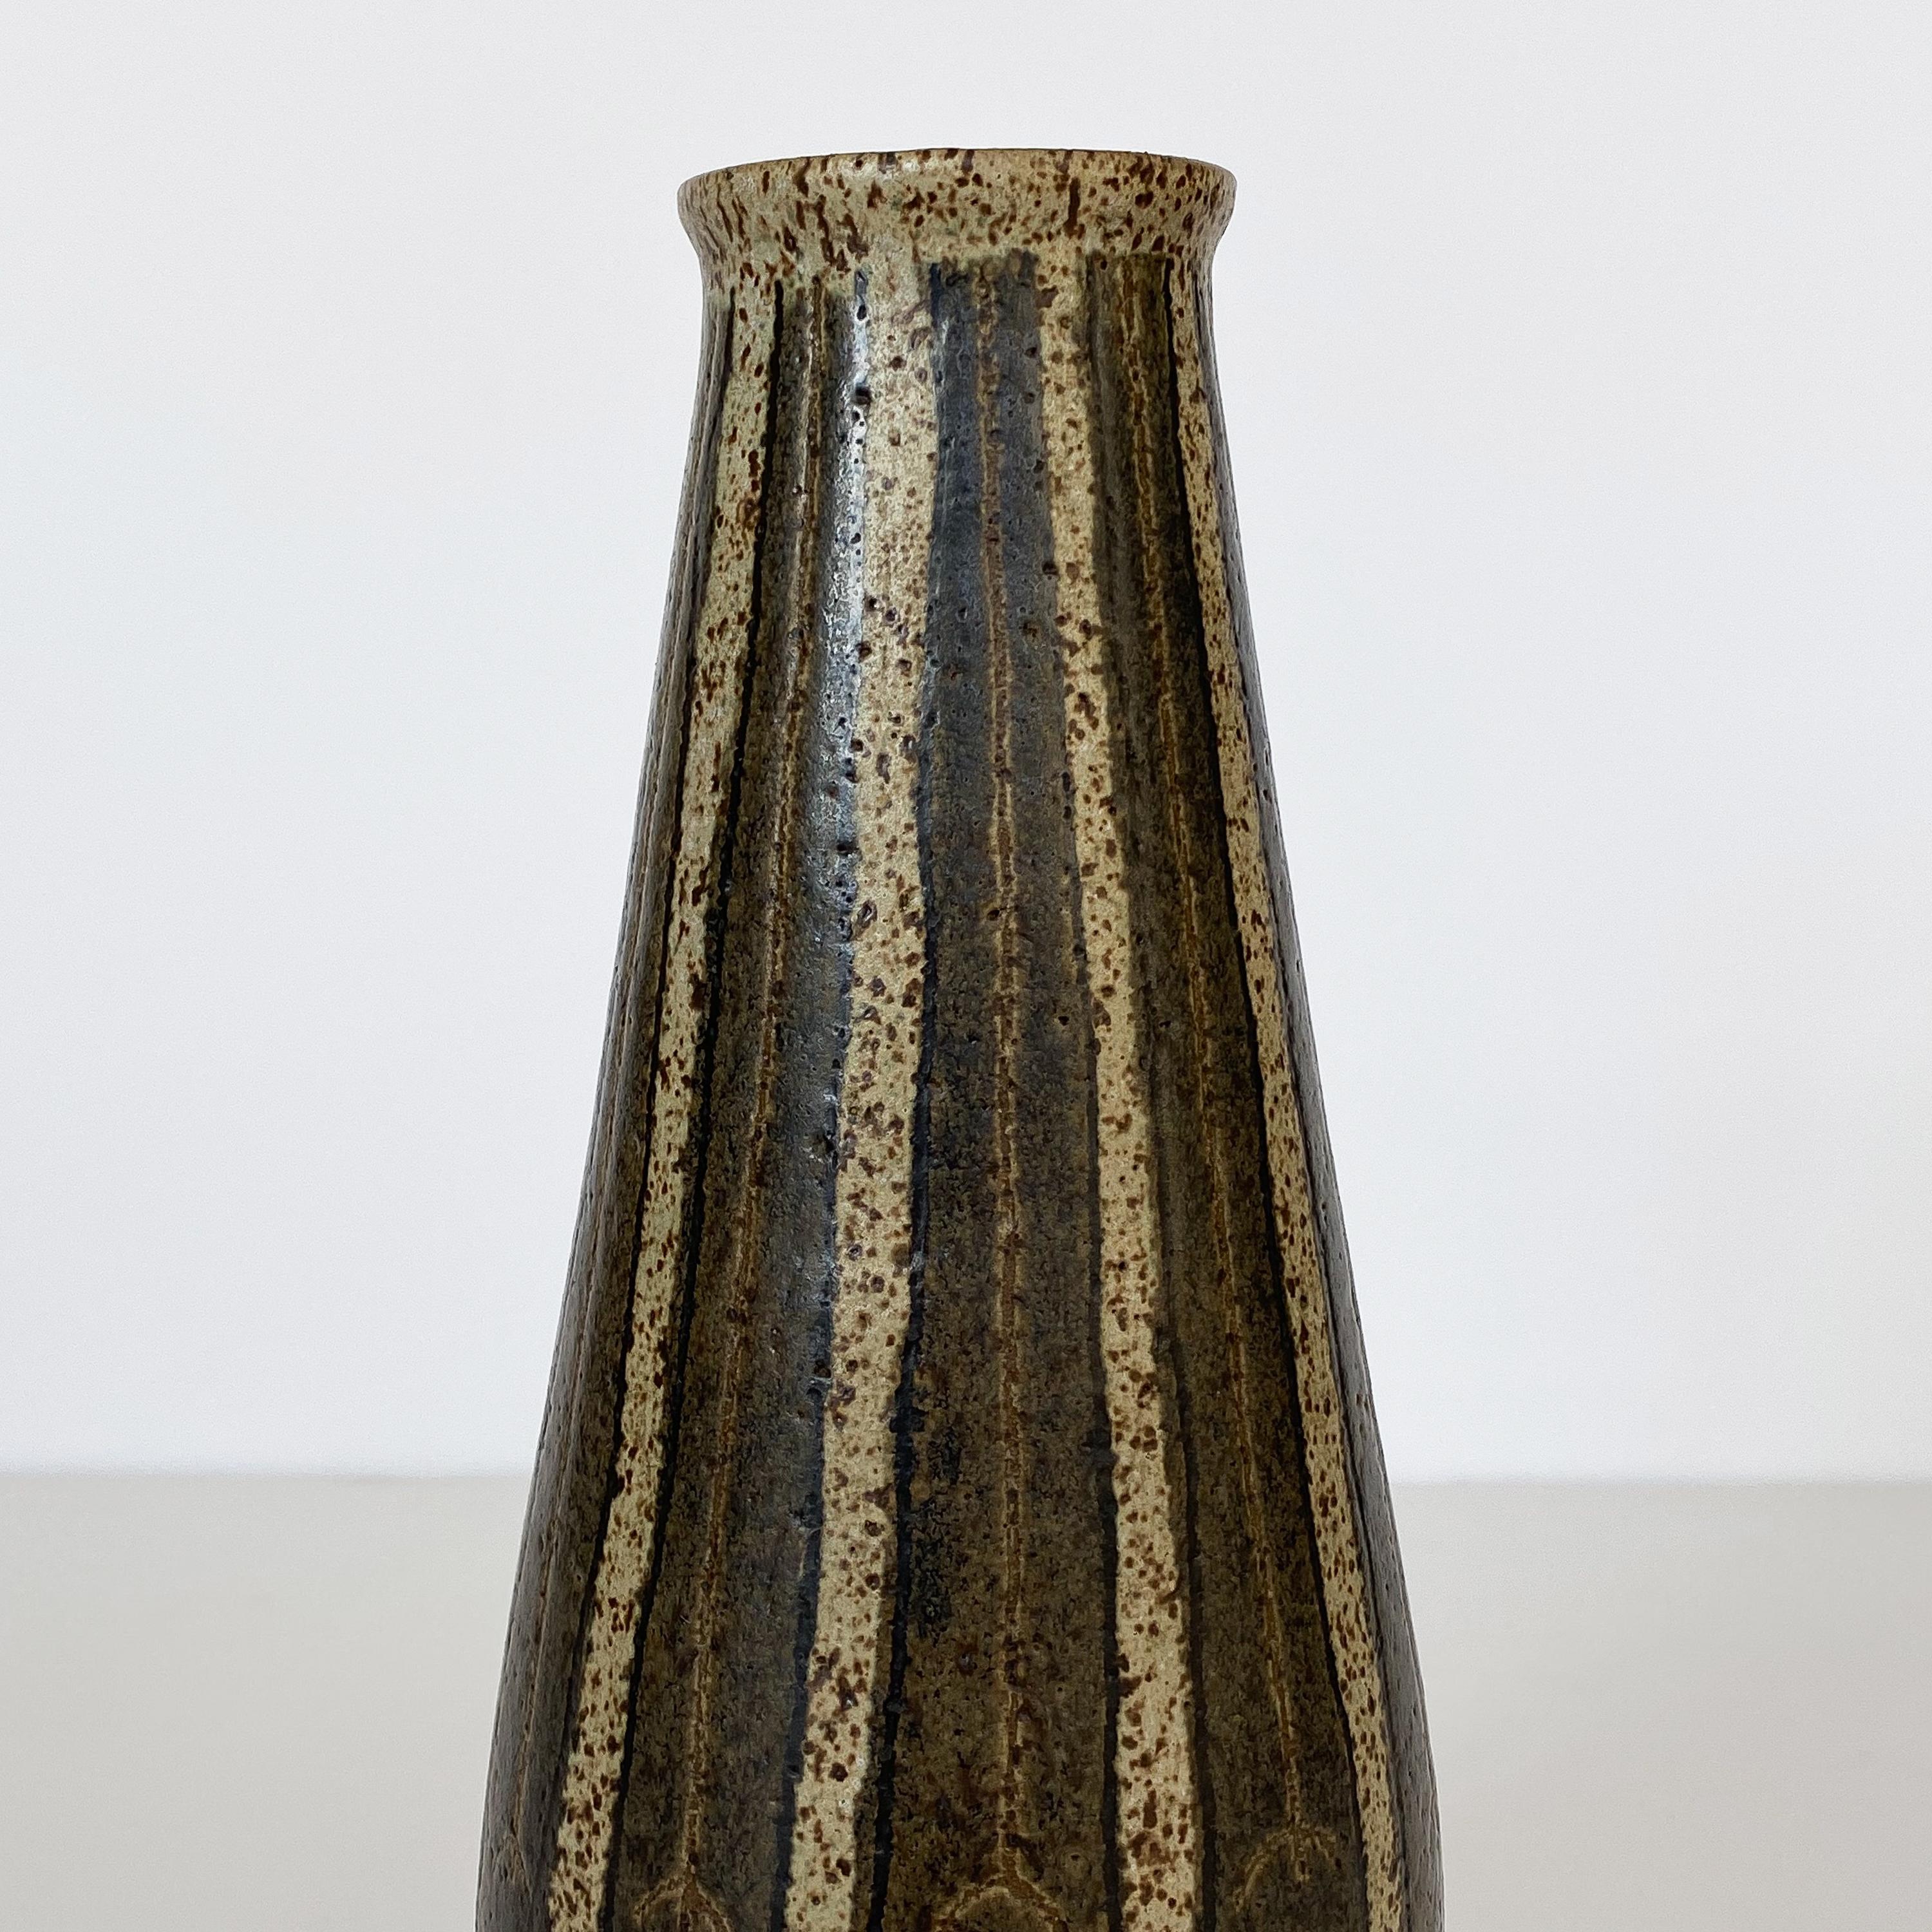 Glazed Abraham Abe Cohn Studio Pottery Vase